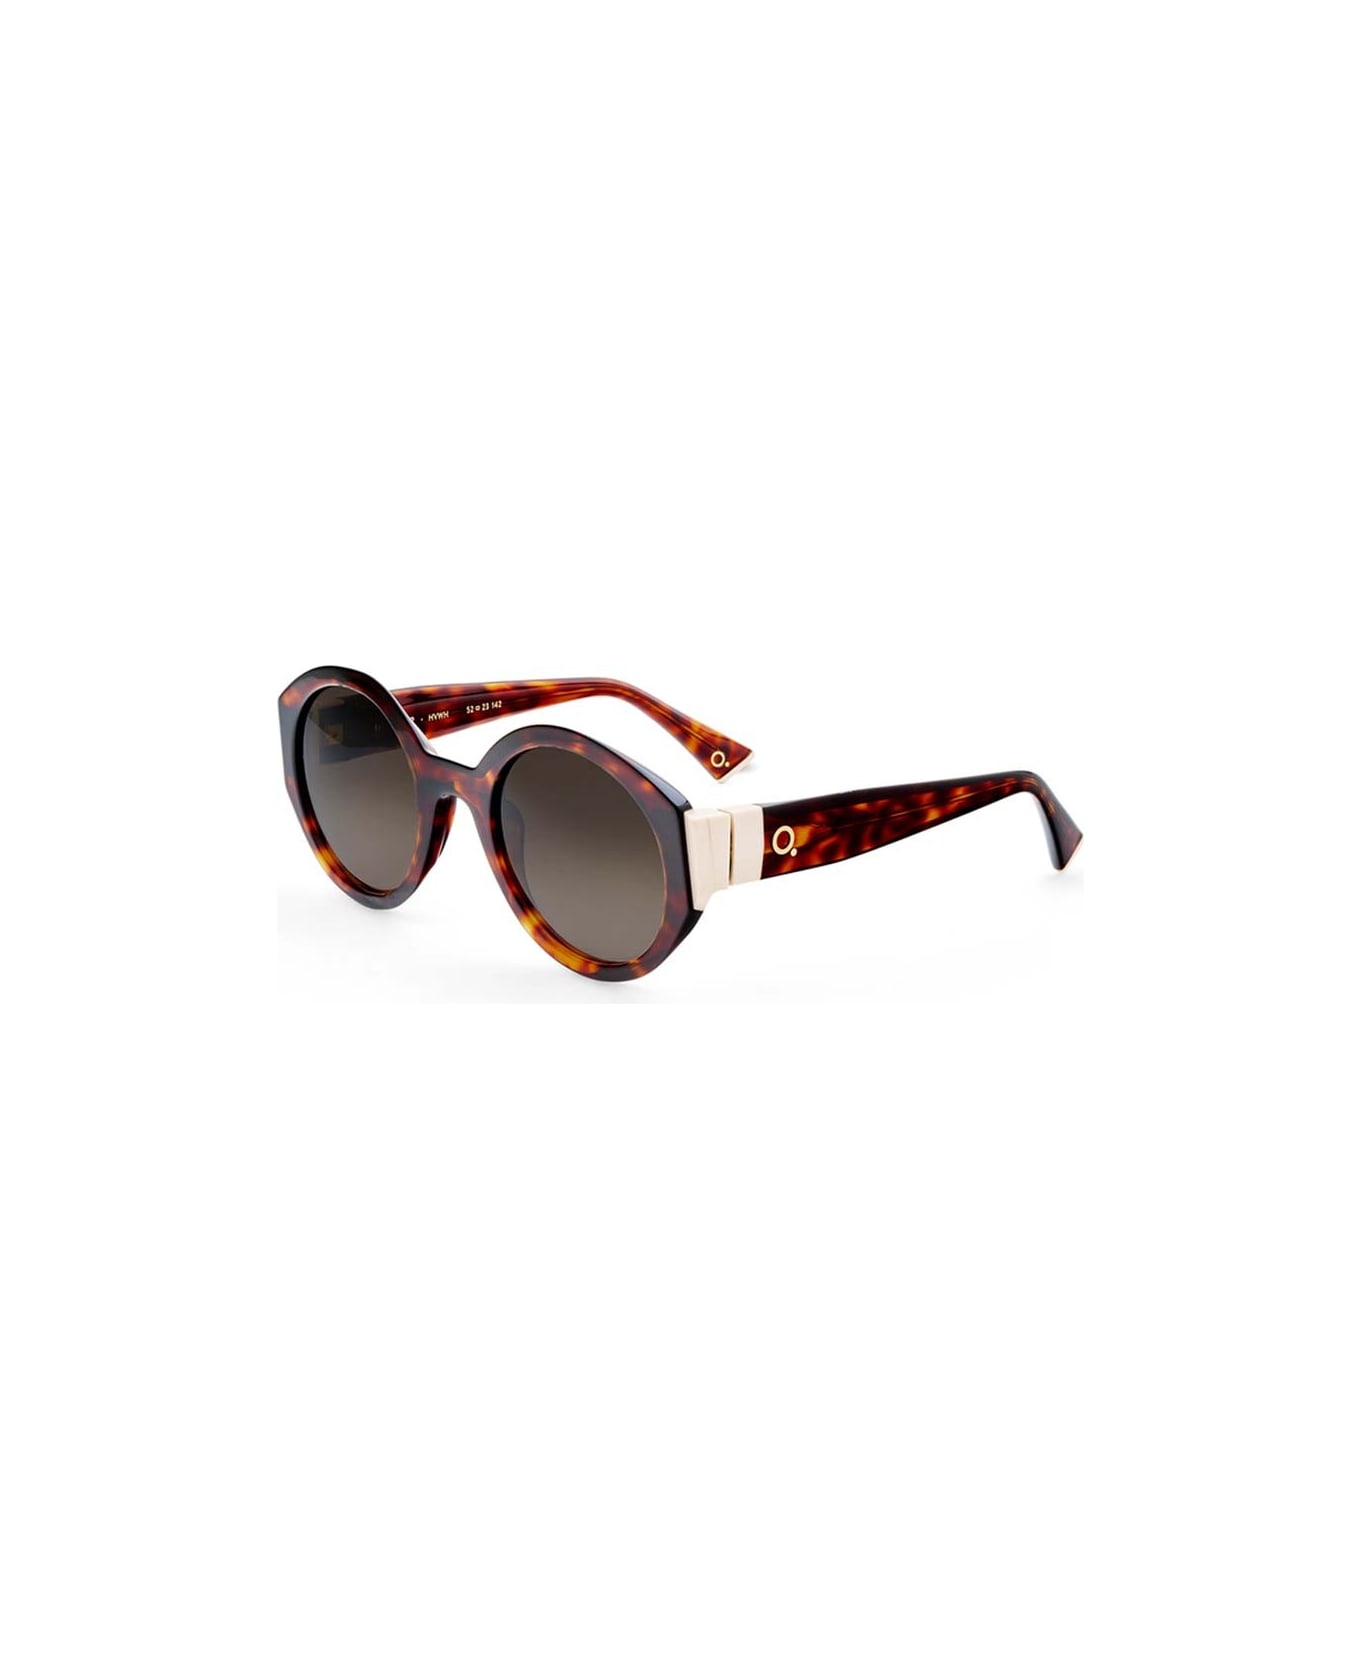 Etnia Barcelona Sunglasses - Havana/Marrone サングラス